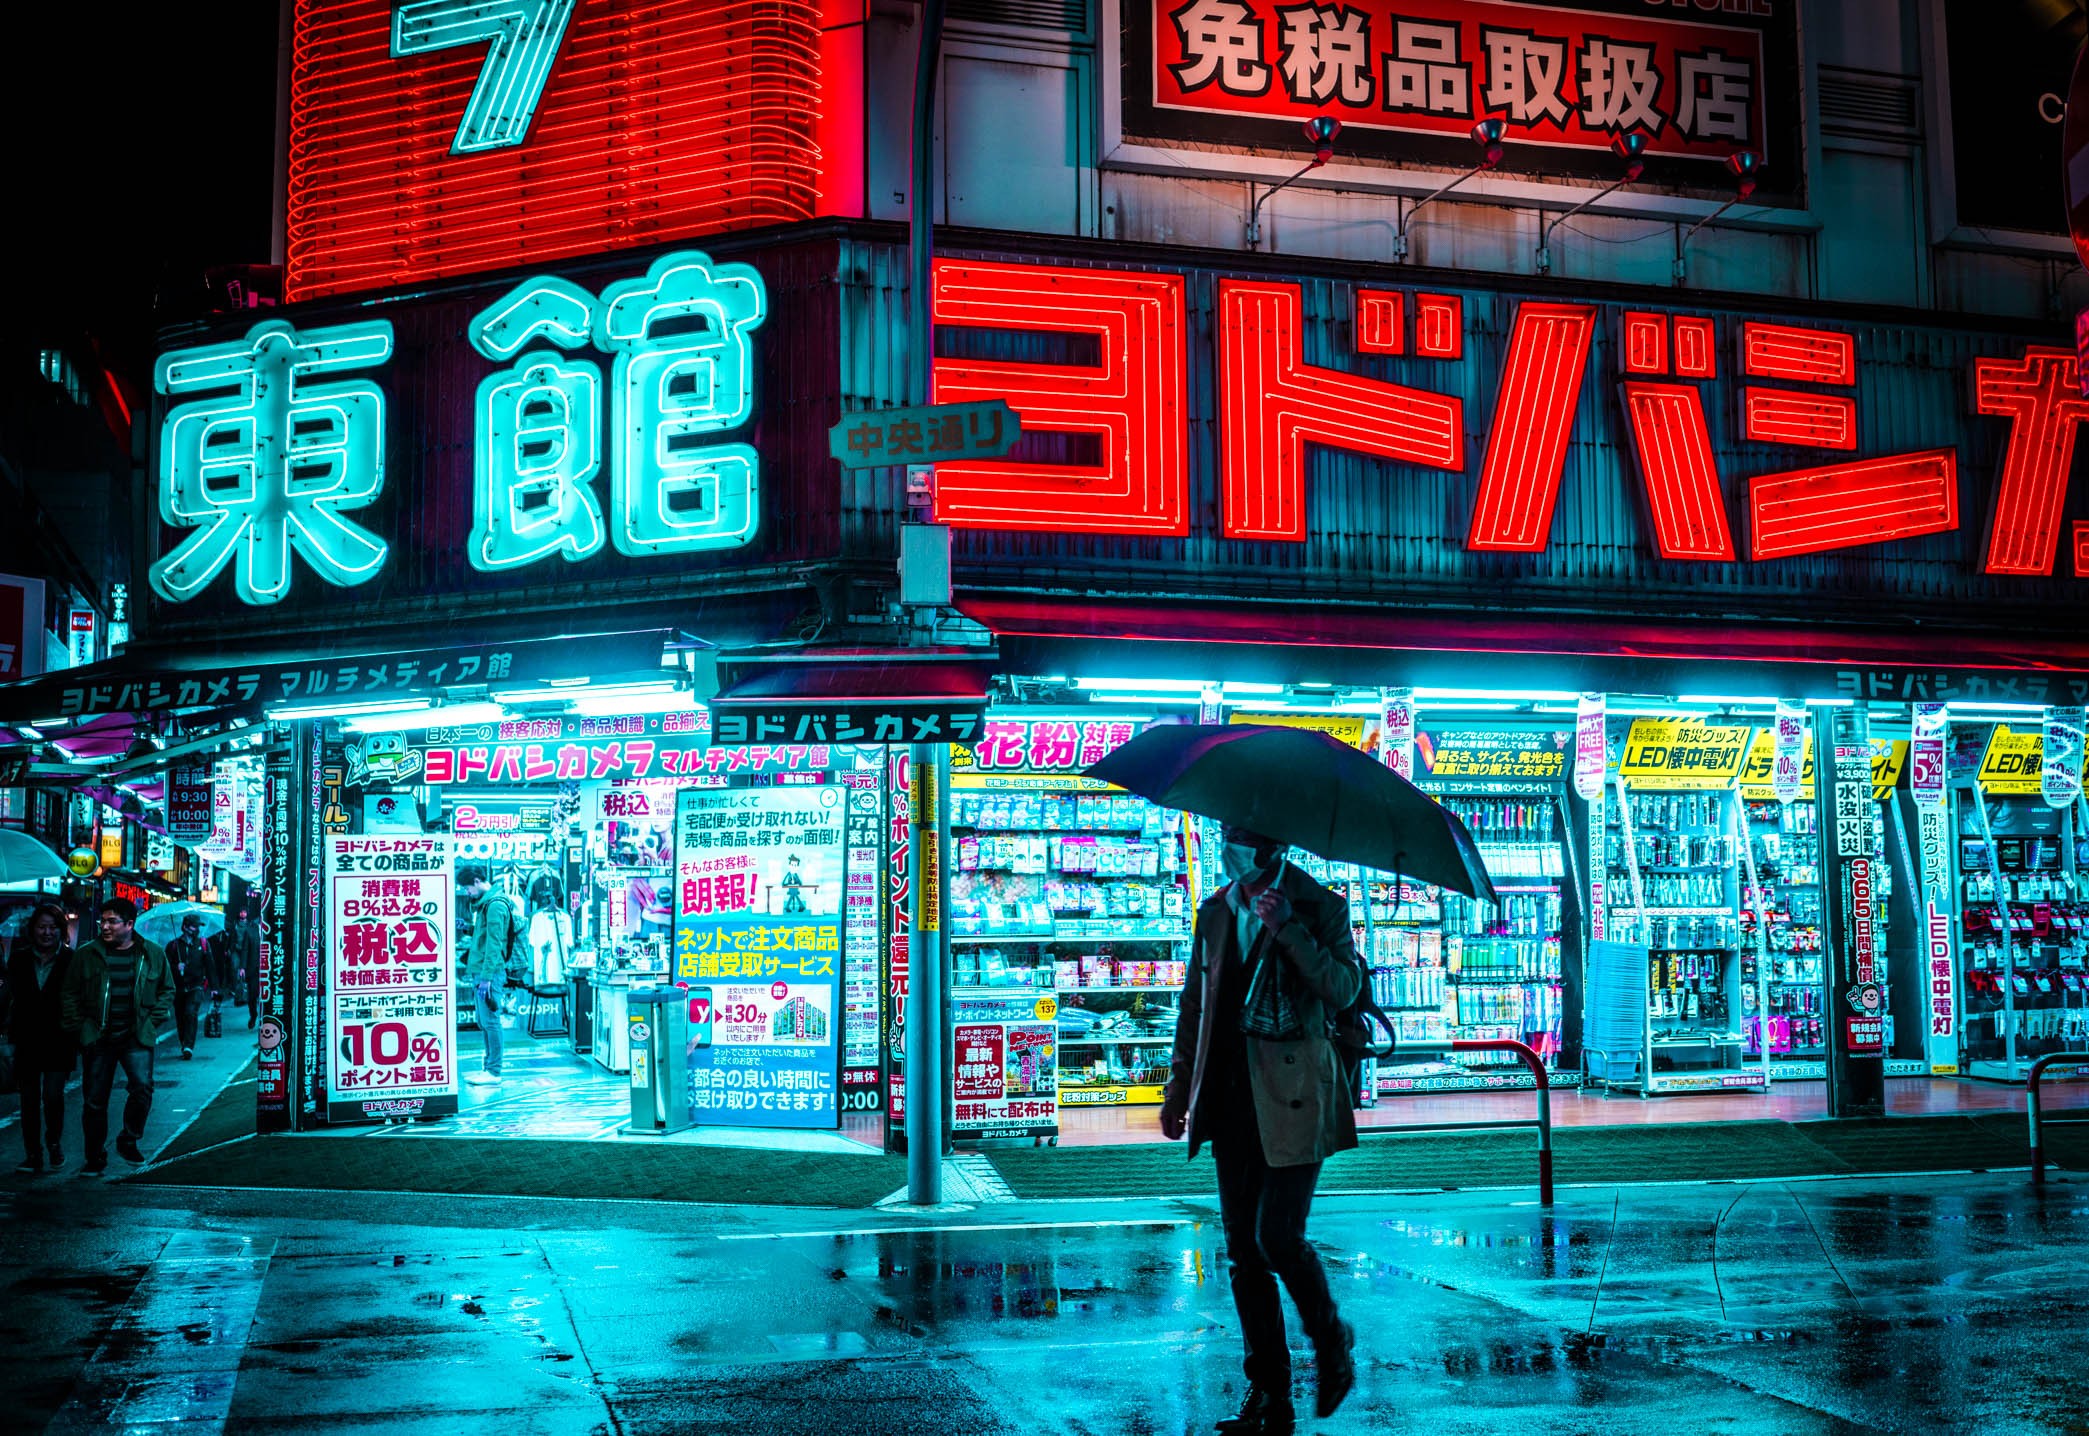 Wallpaper / Tokyo, Japan, rain, cyan, red, neon glow, neon, city lights, wet street, bright, umbrella, teemusphoto free download